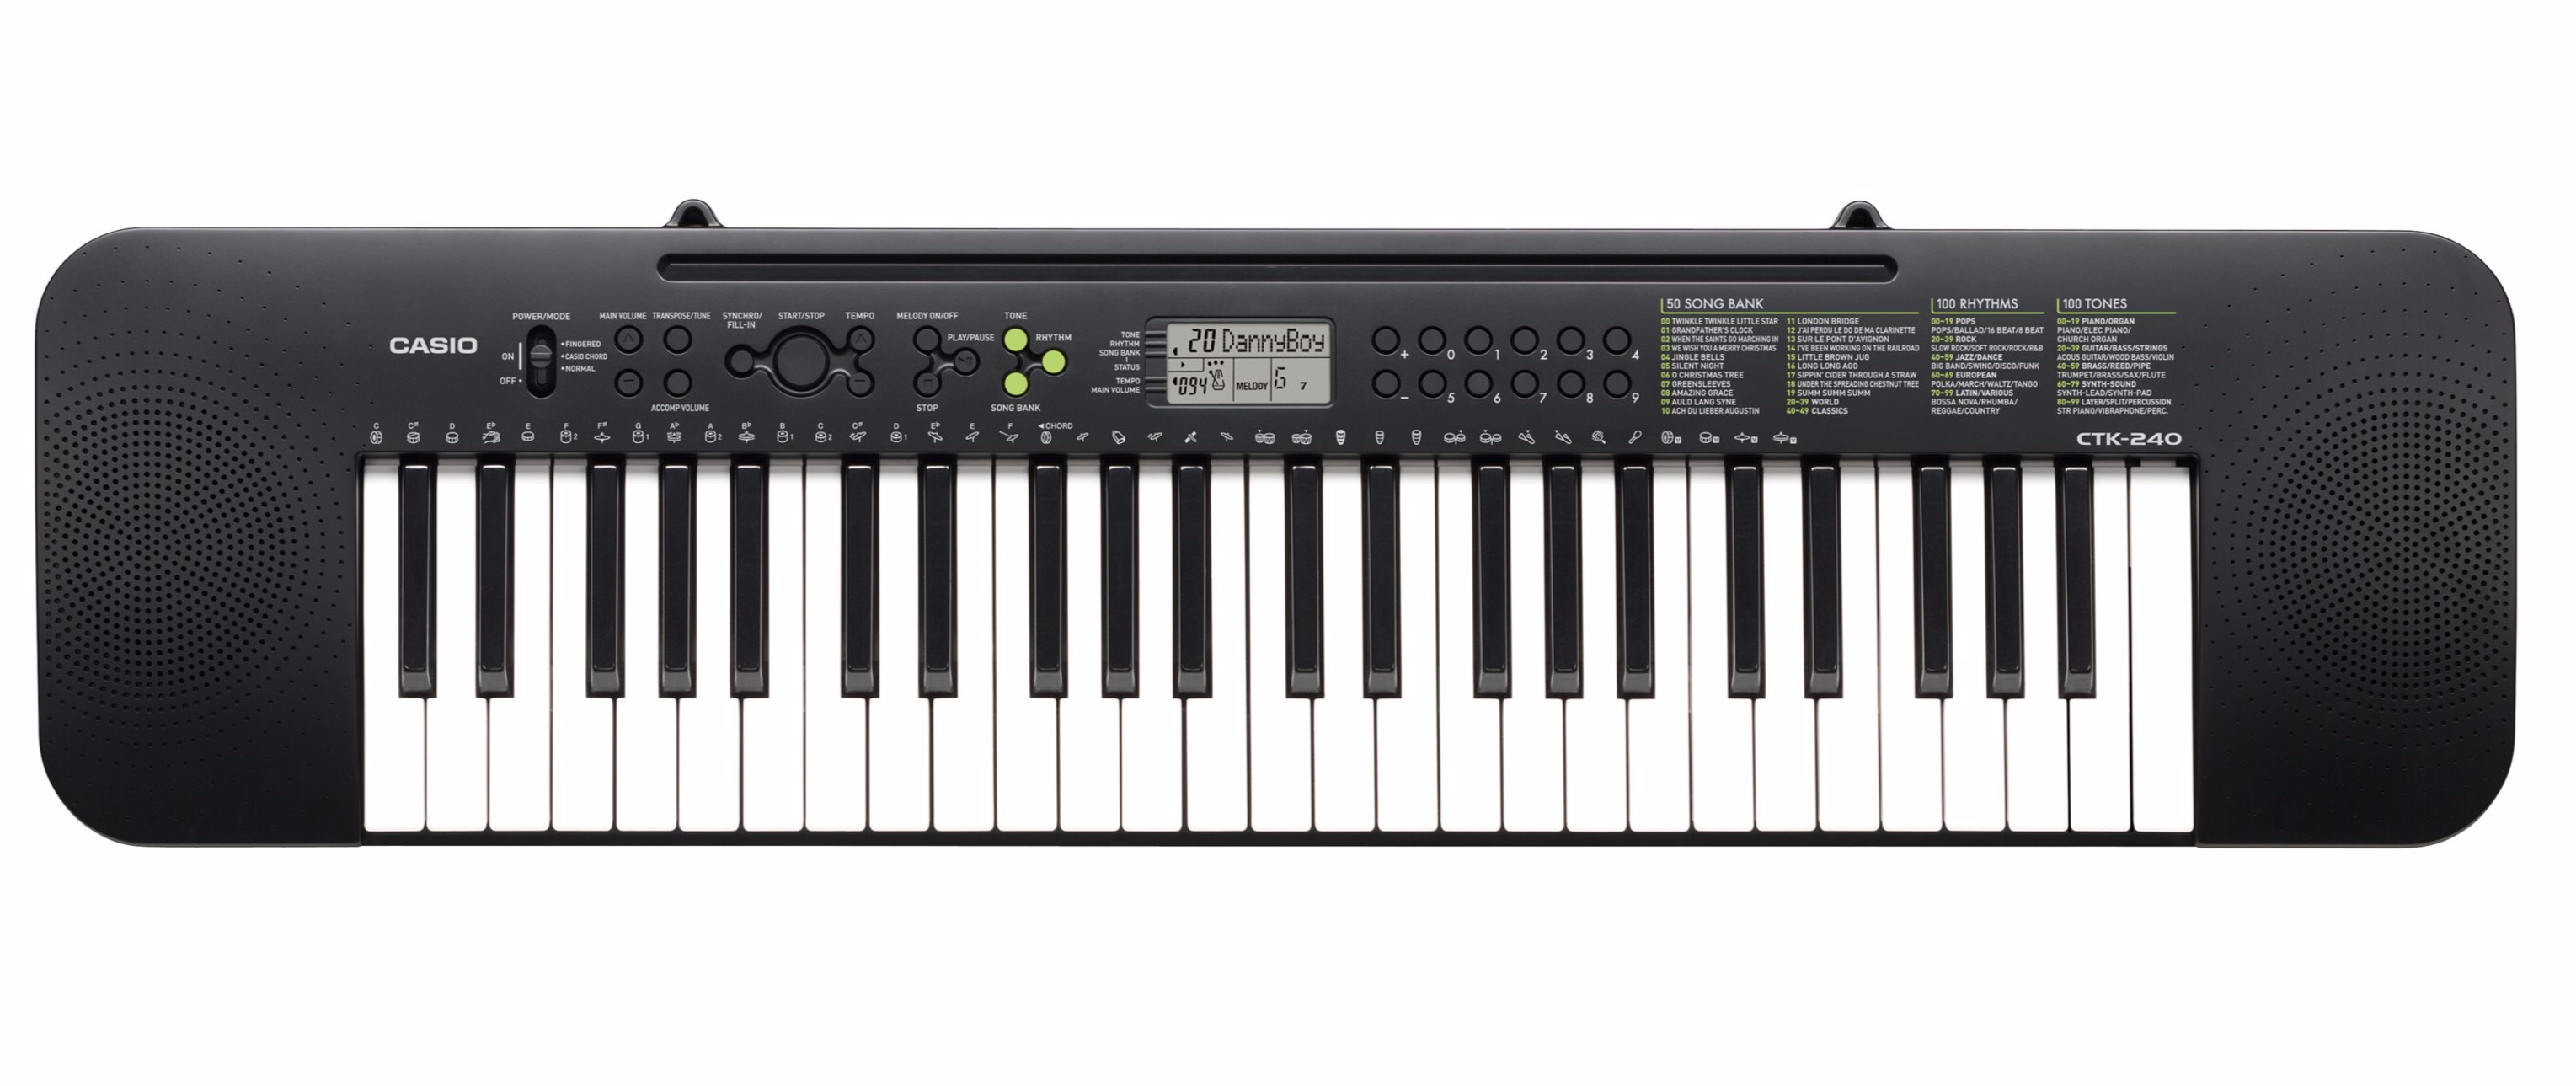 Casio CTK 240 teclado para principiantes | MUSIC STORE professional